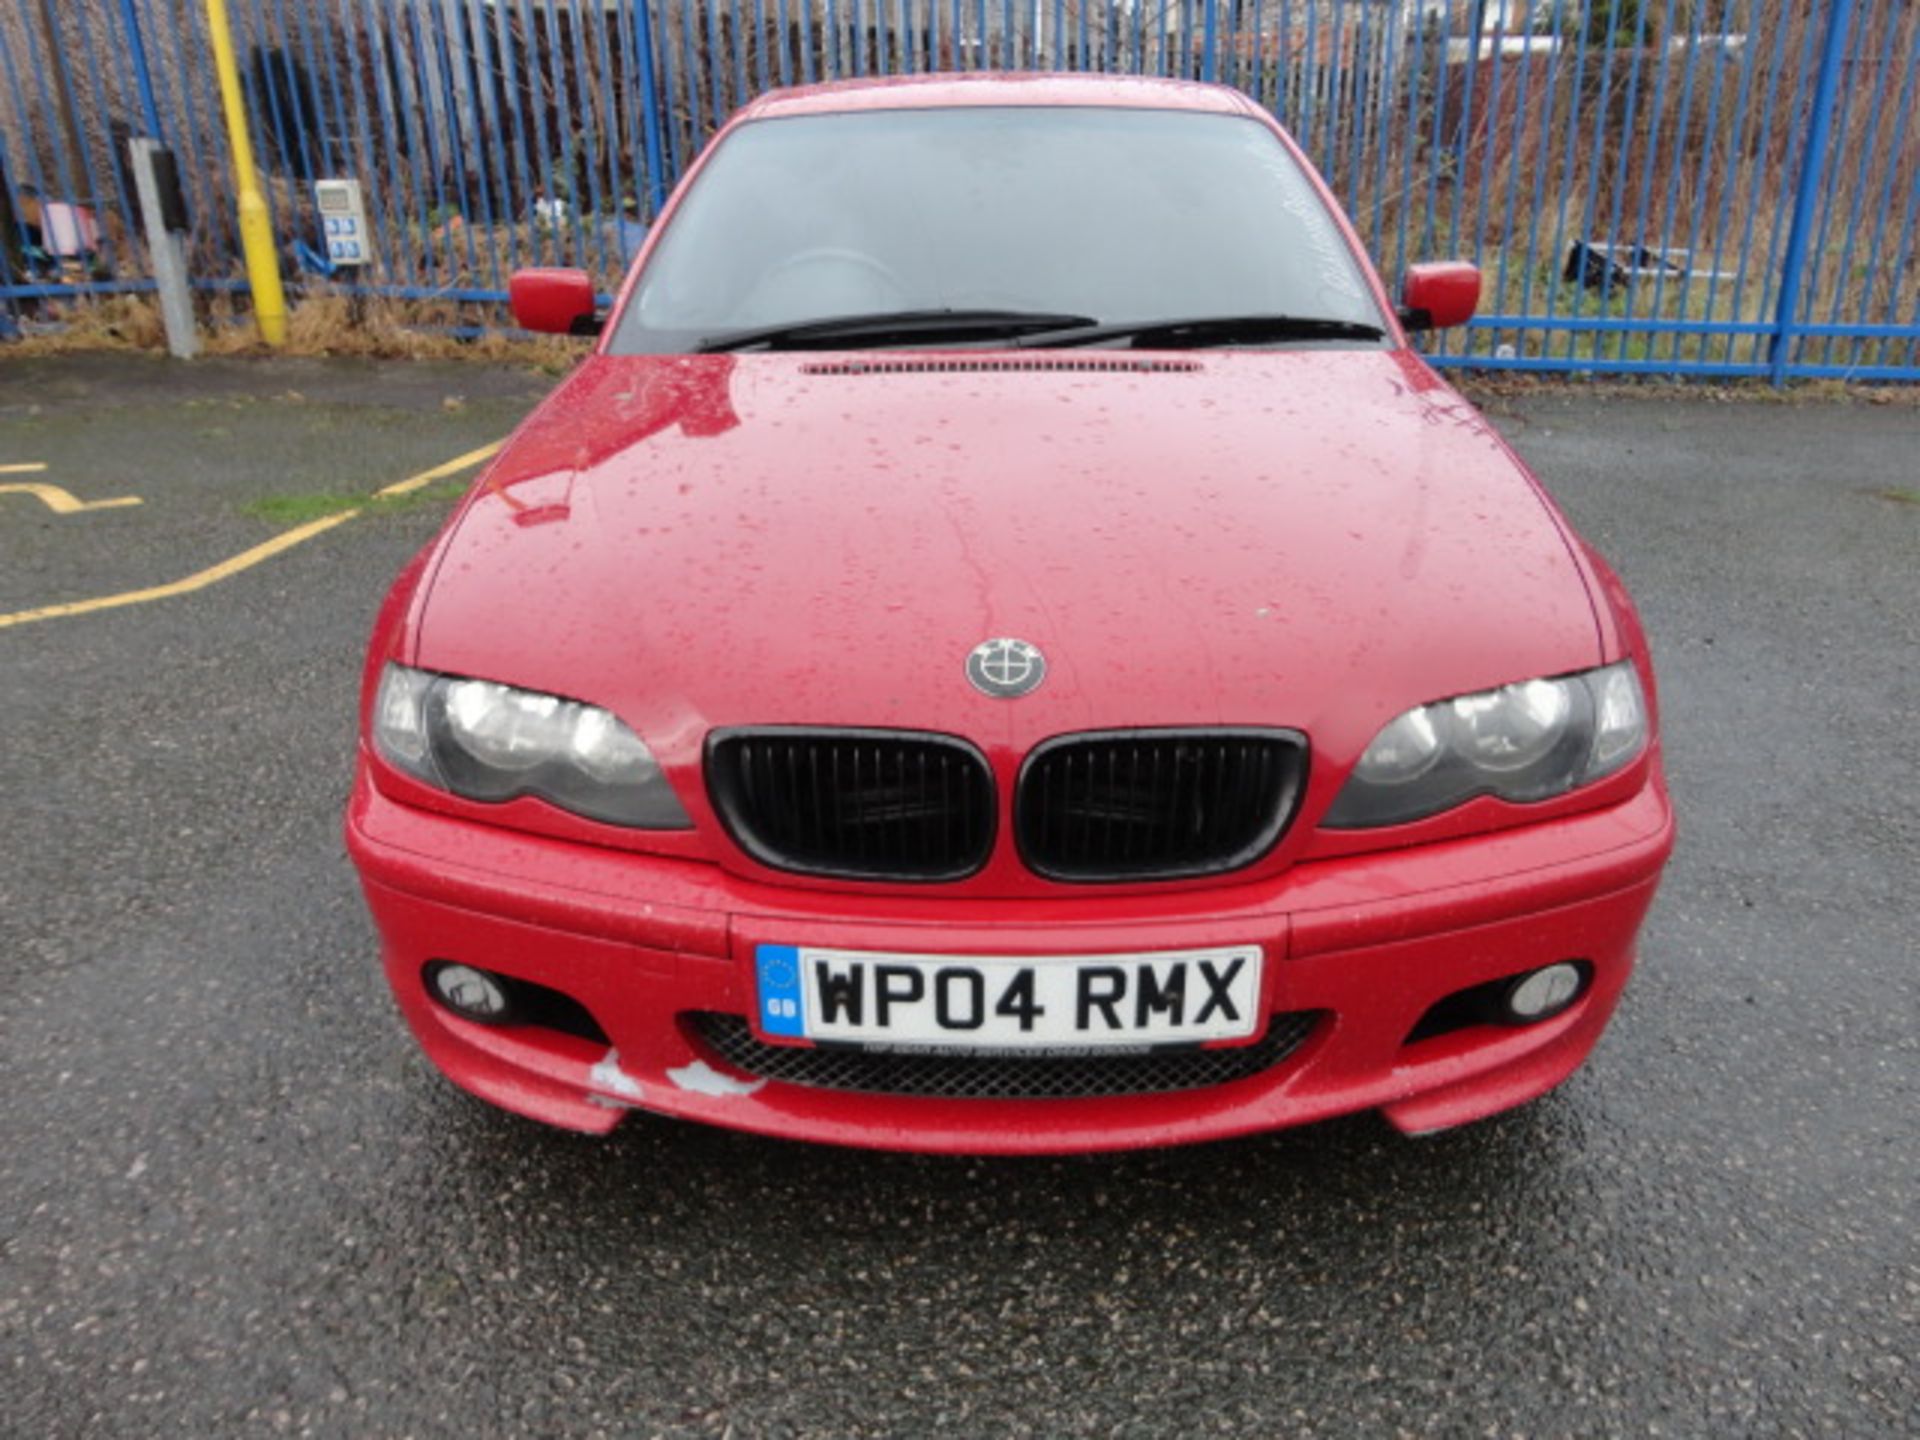 2004/04 REG BMW 320D SPORT 2.0 MANUAL METALLIC RED *NO VAT* - Image 2 of 10